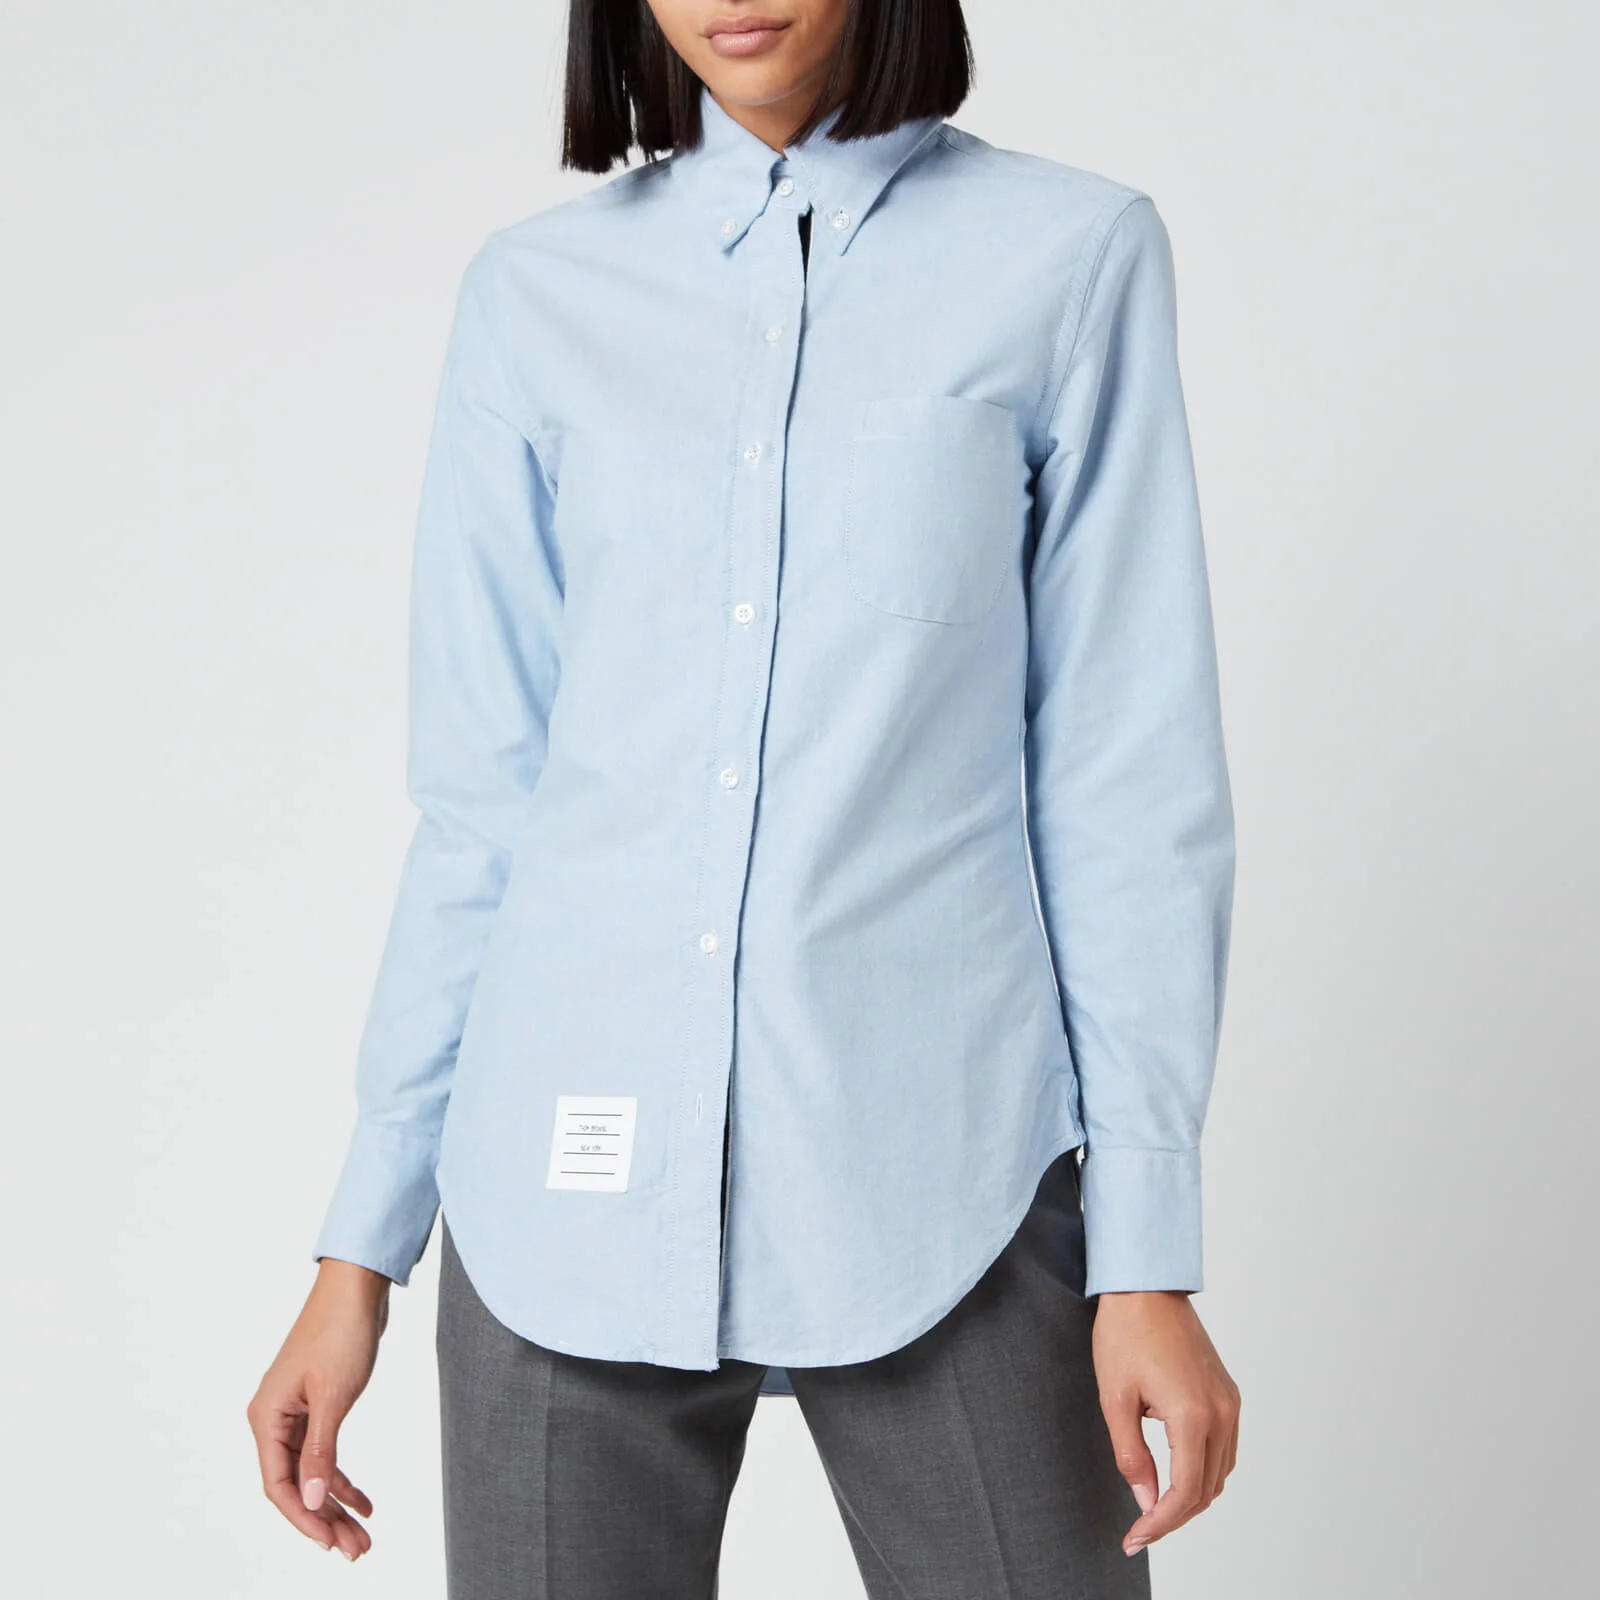 Thom Browne Women's Classic Long Sleeve Shirt - Light Blue Image 1